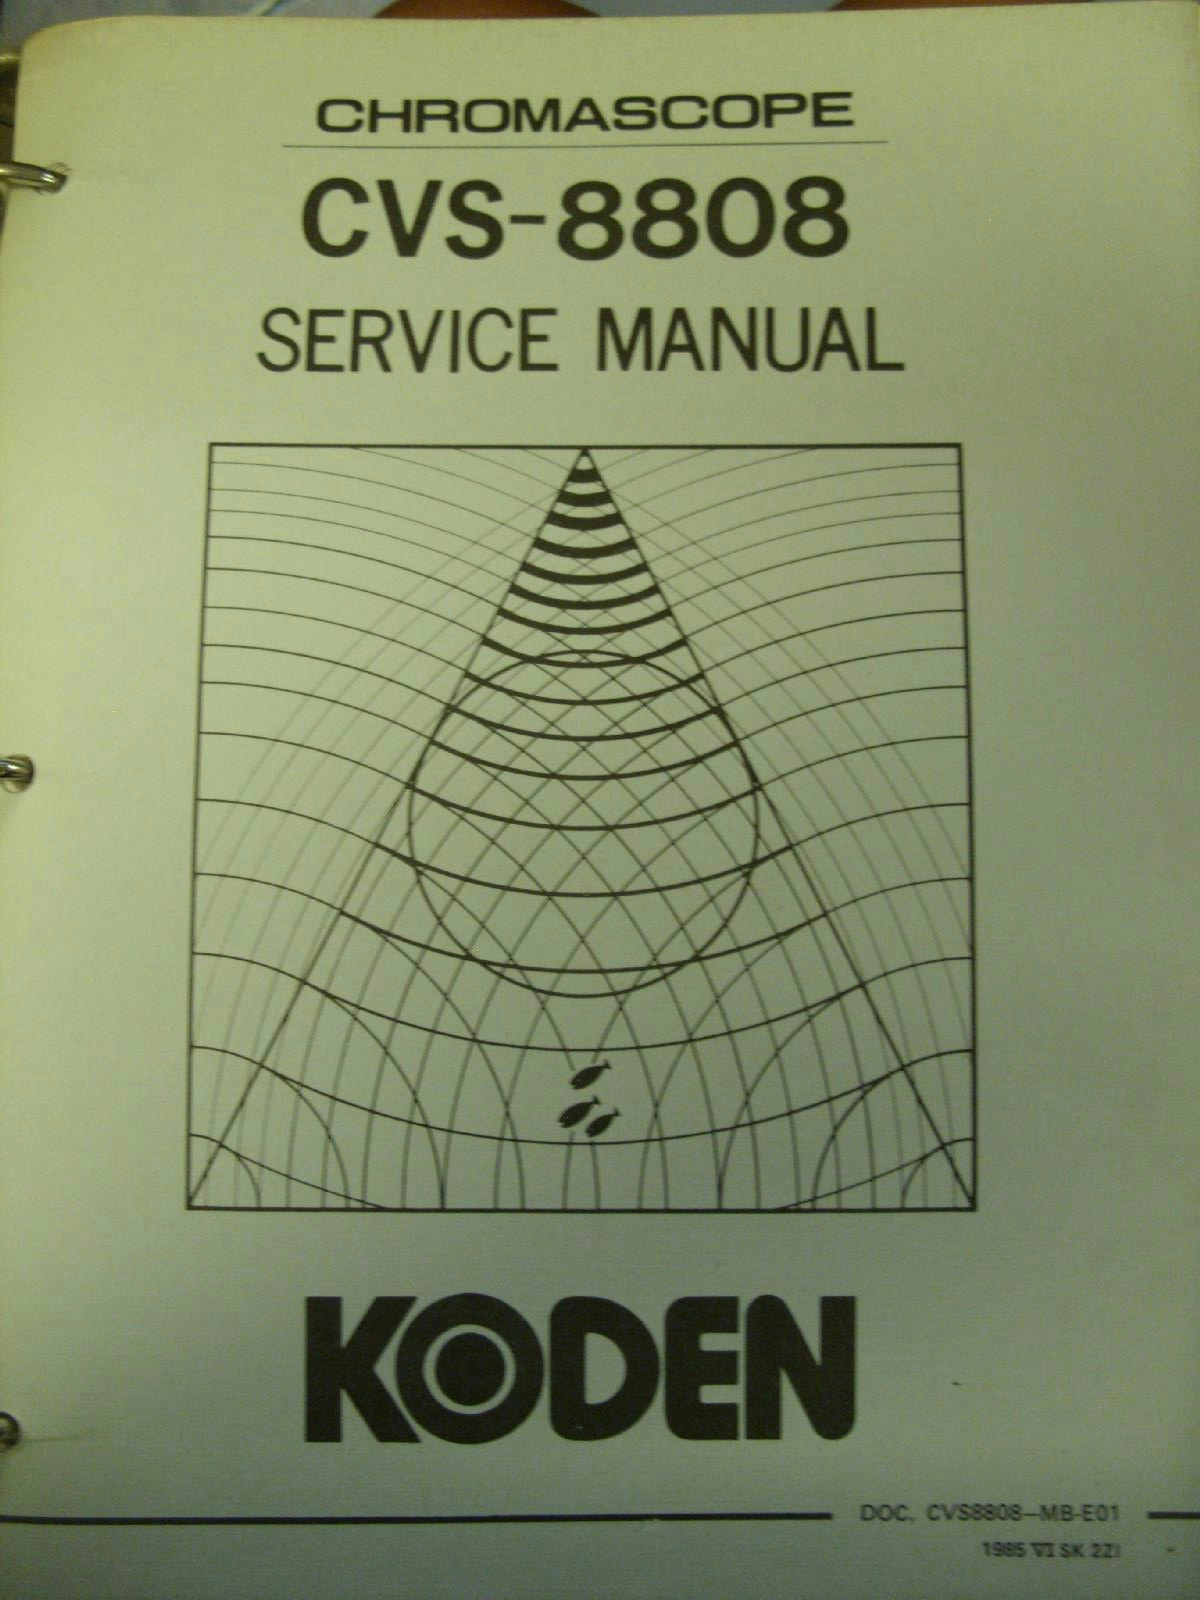 koden service manual hard cover cvs